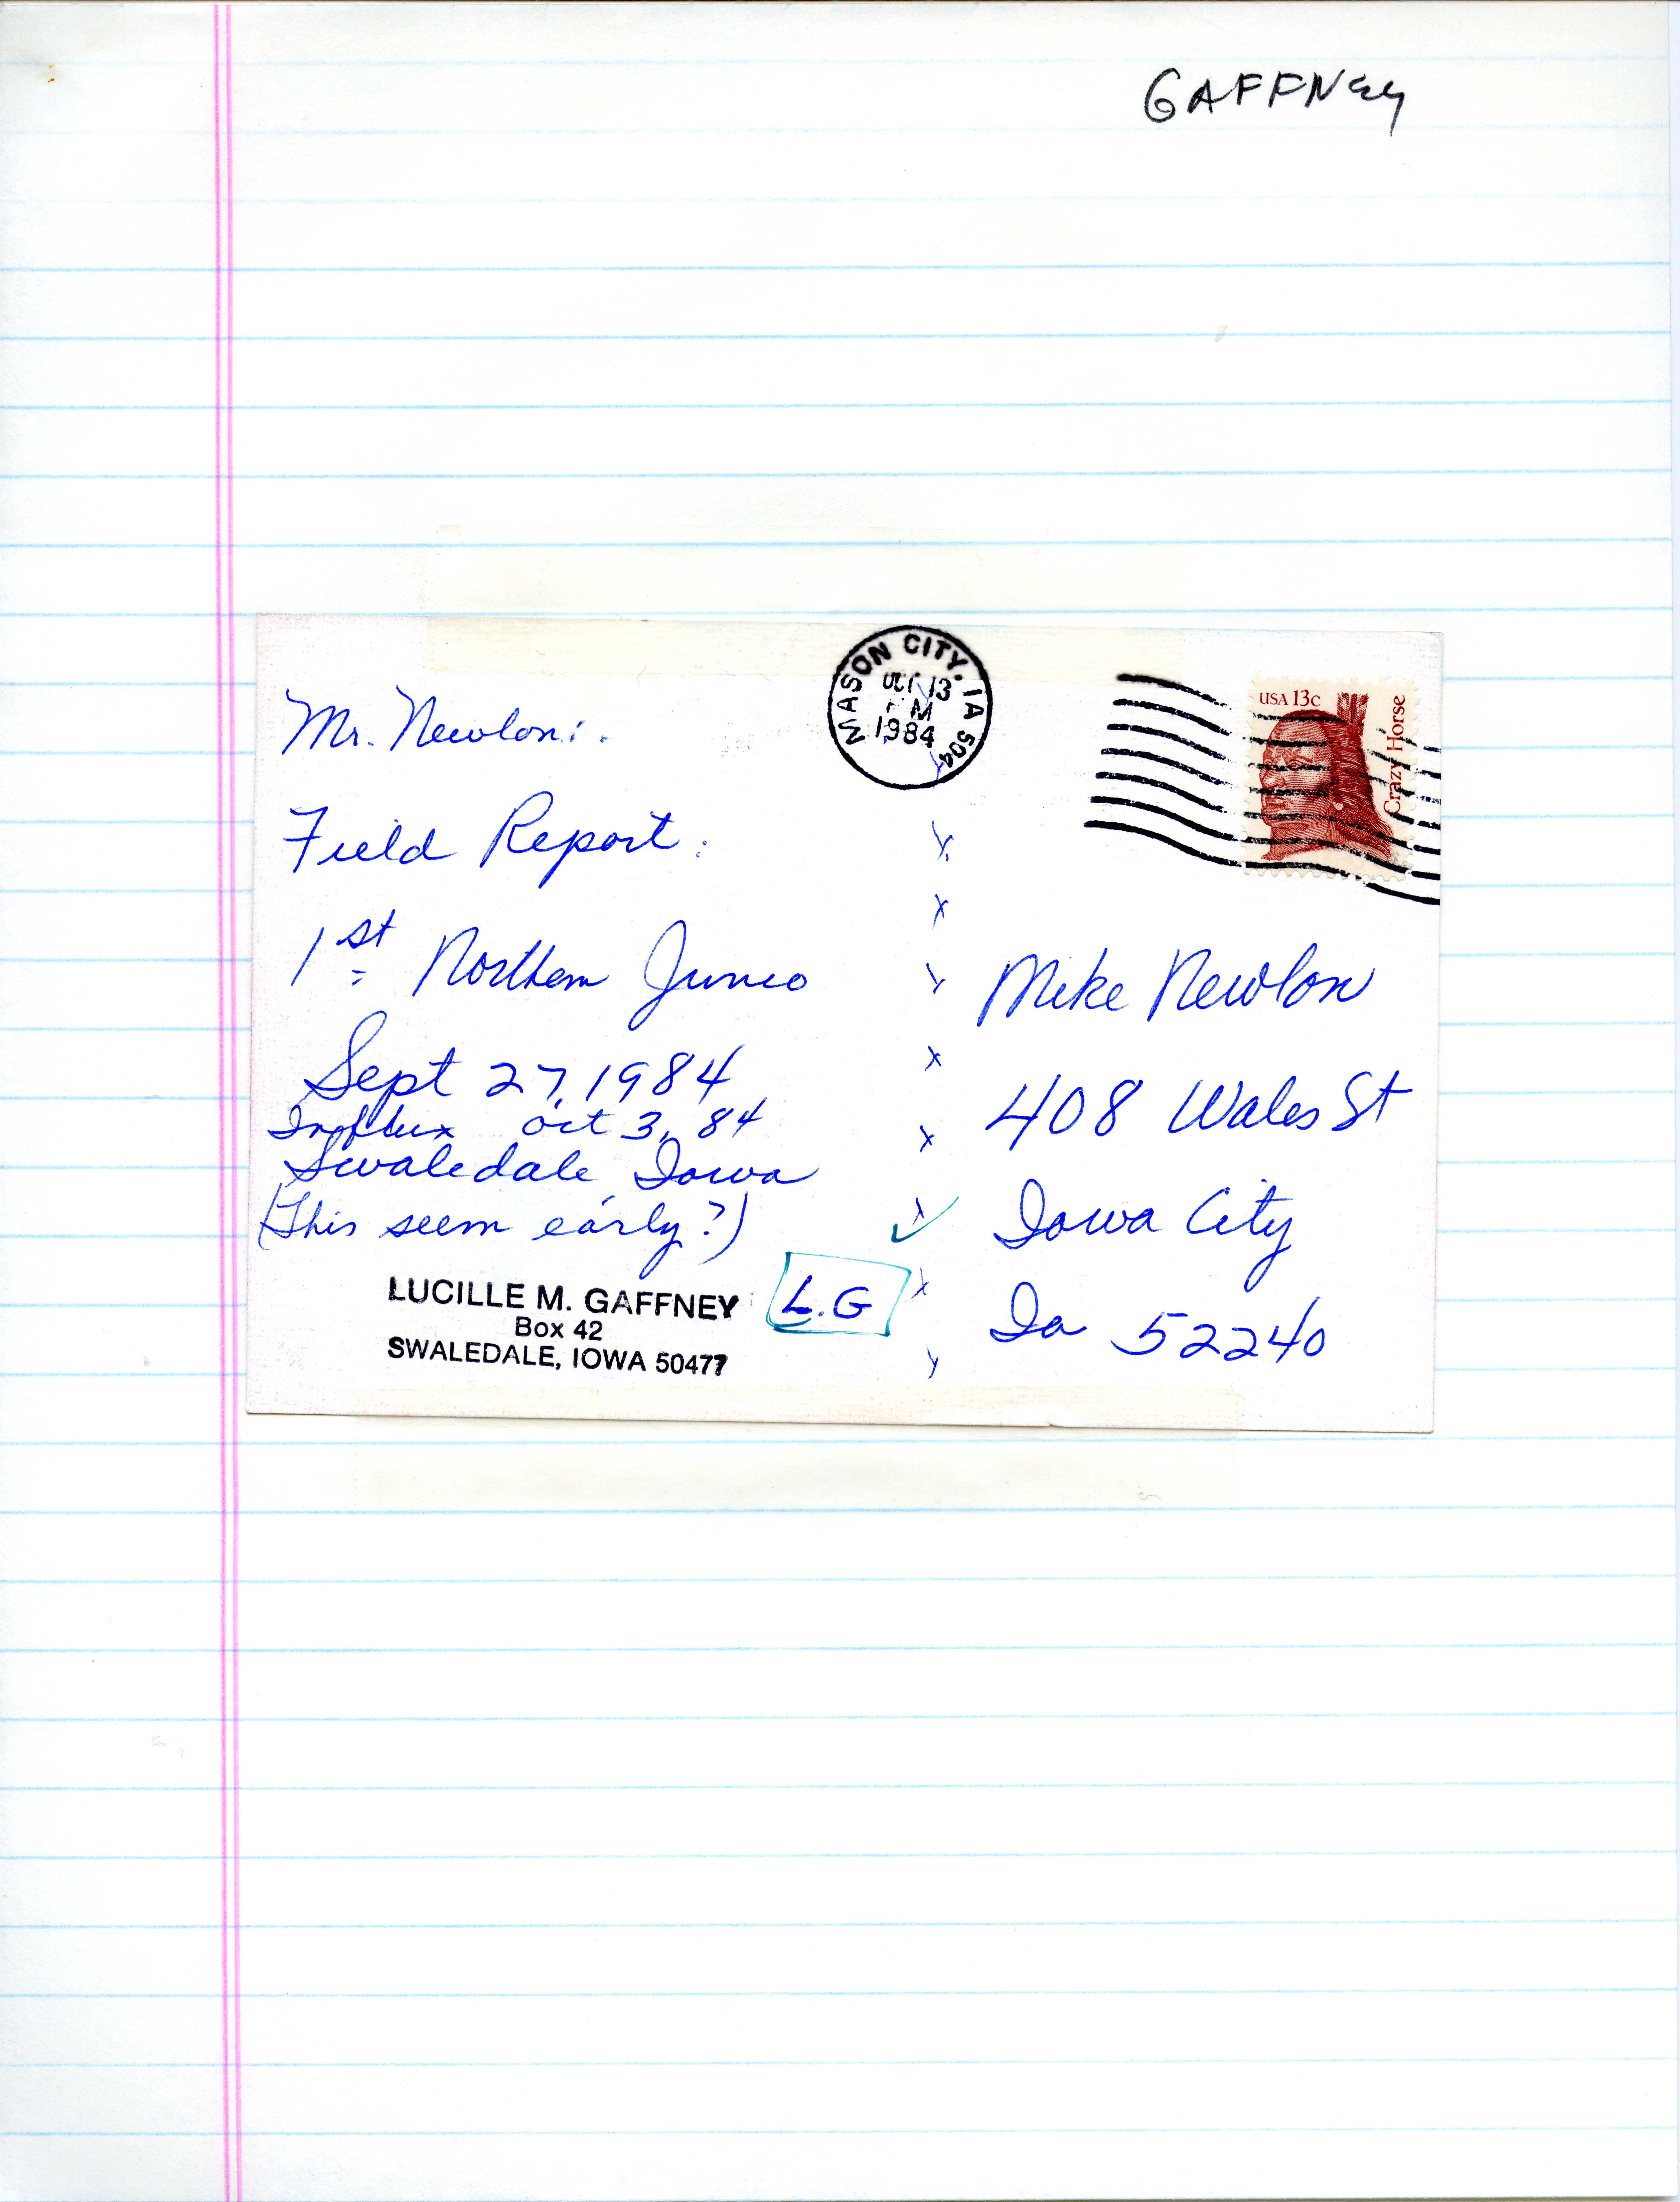 Lucille M. Gaffney postcard to Michael C. Newlon regarding bird sightings in Swaledale, Iowa, October 13, 1984